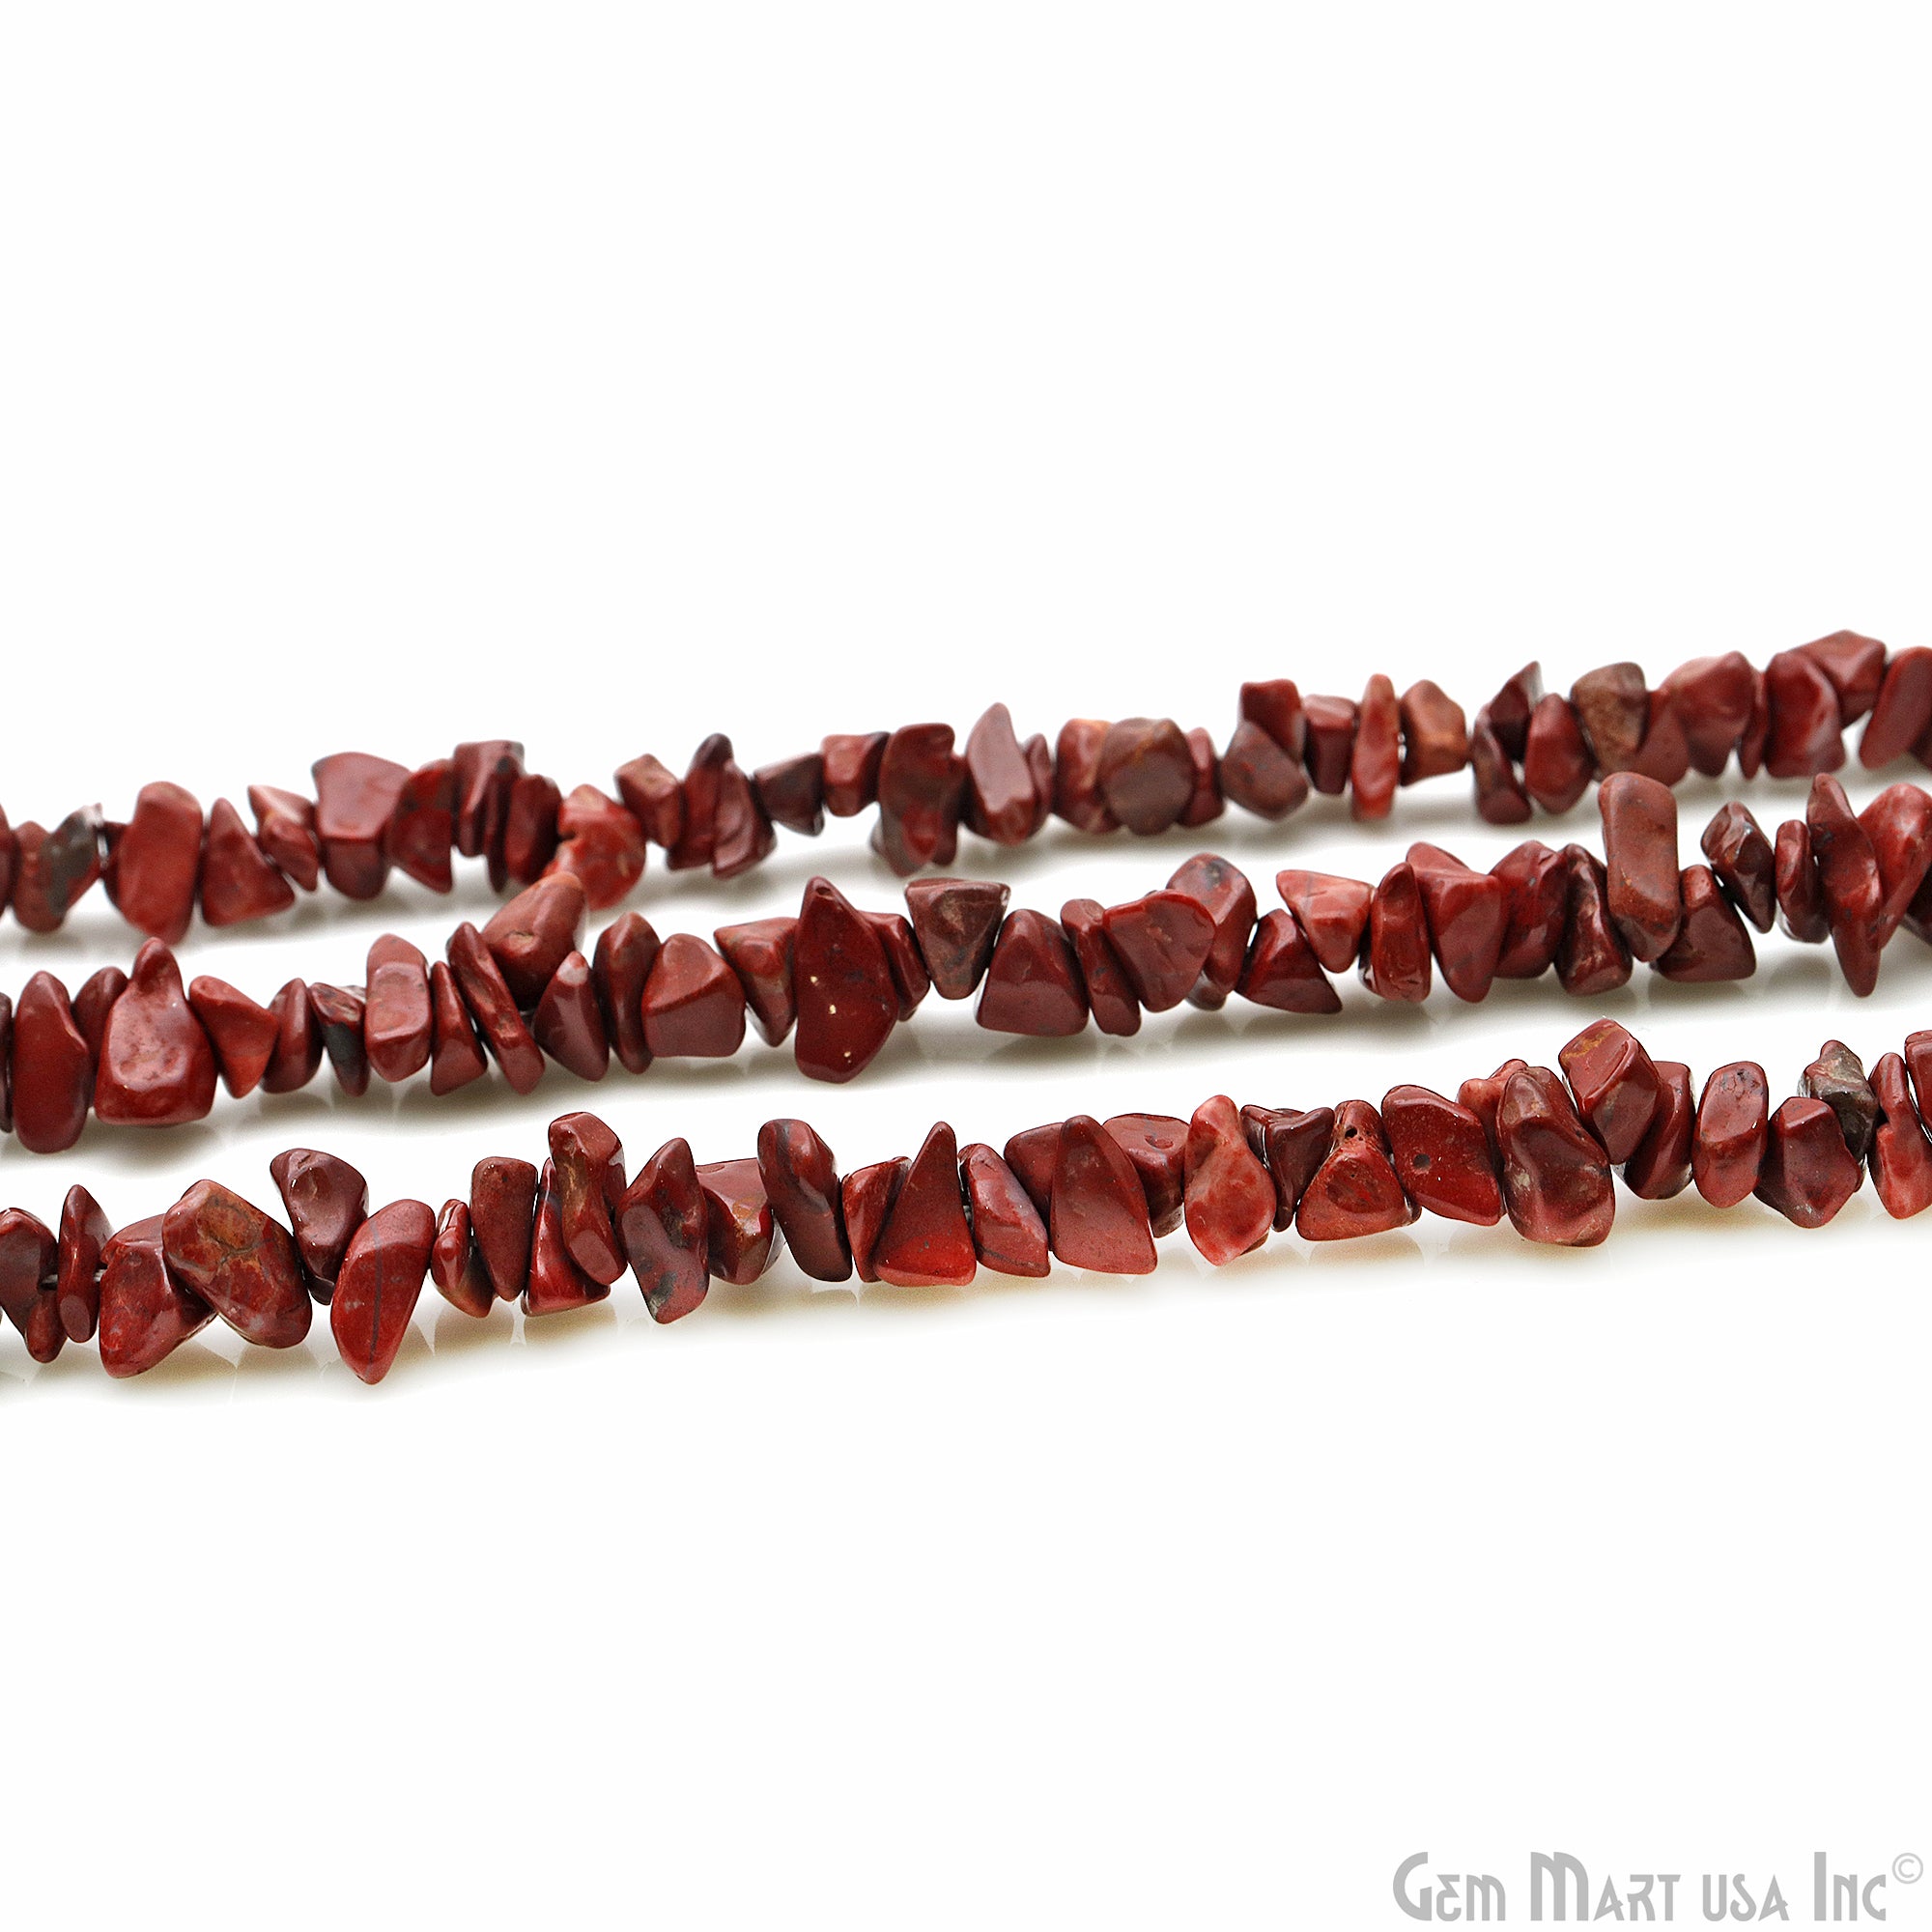 Dark Red Coral Chip Free Form 7-10mm Nugget Beads Gemstone Strands 34"